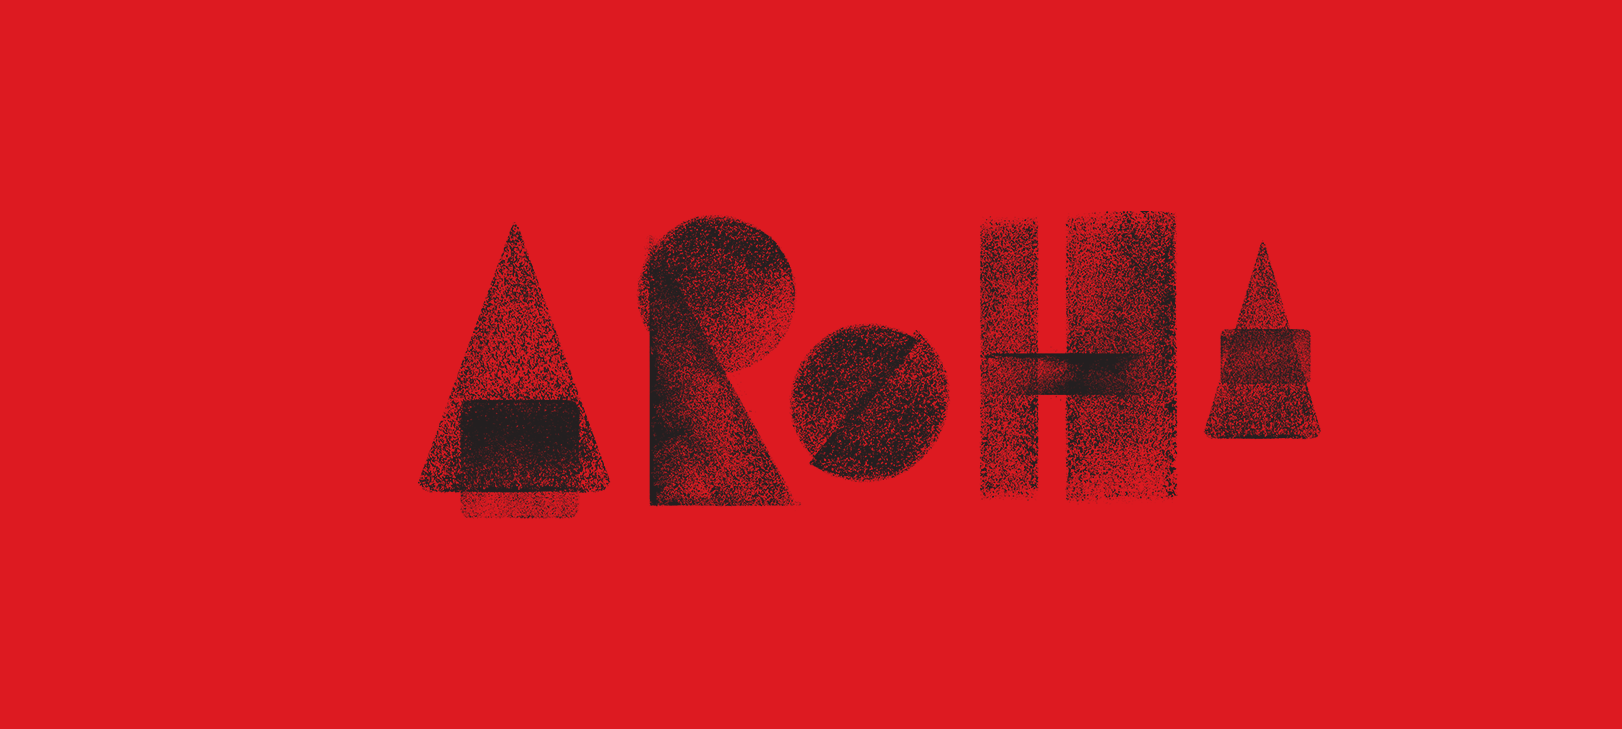 Aroha theme for AAF 2021